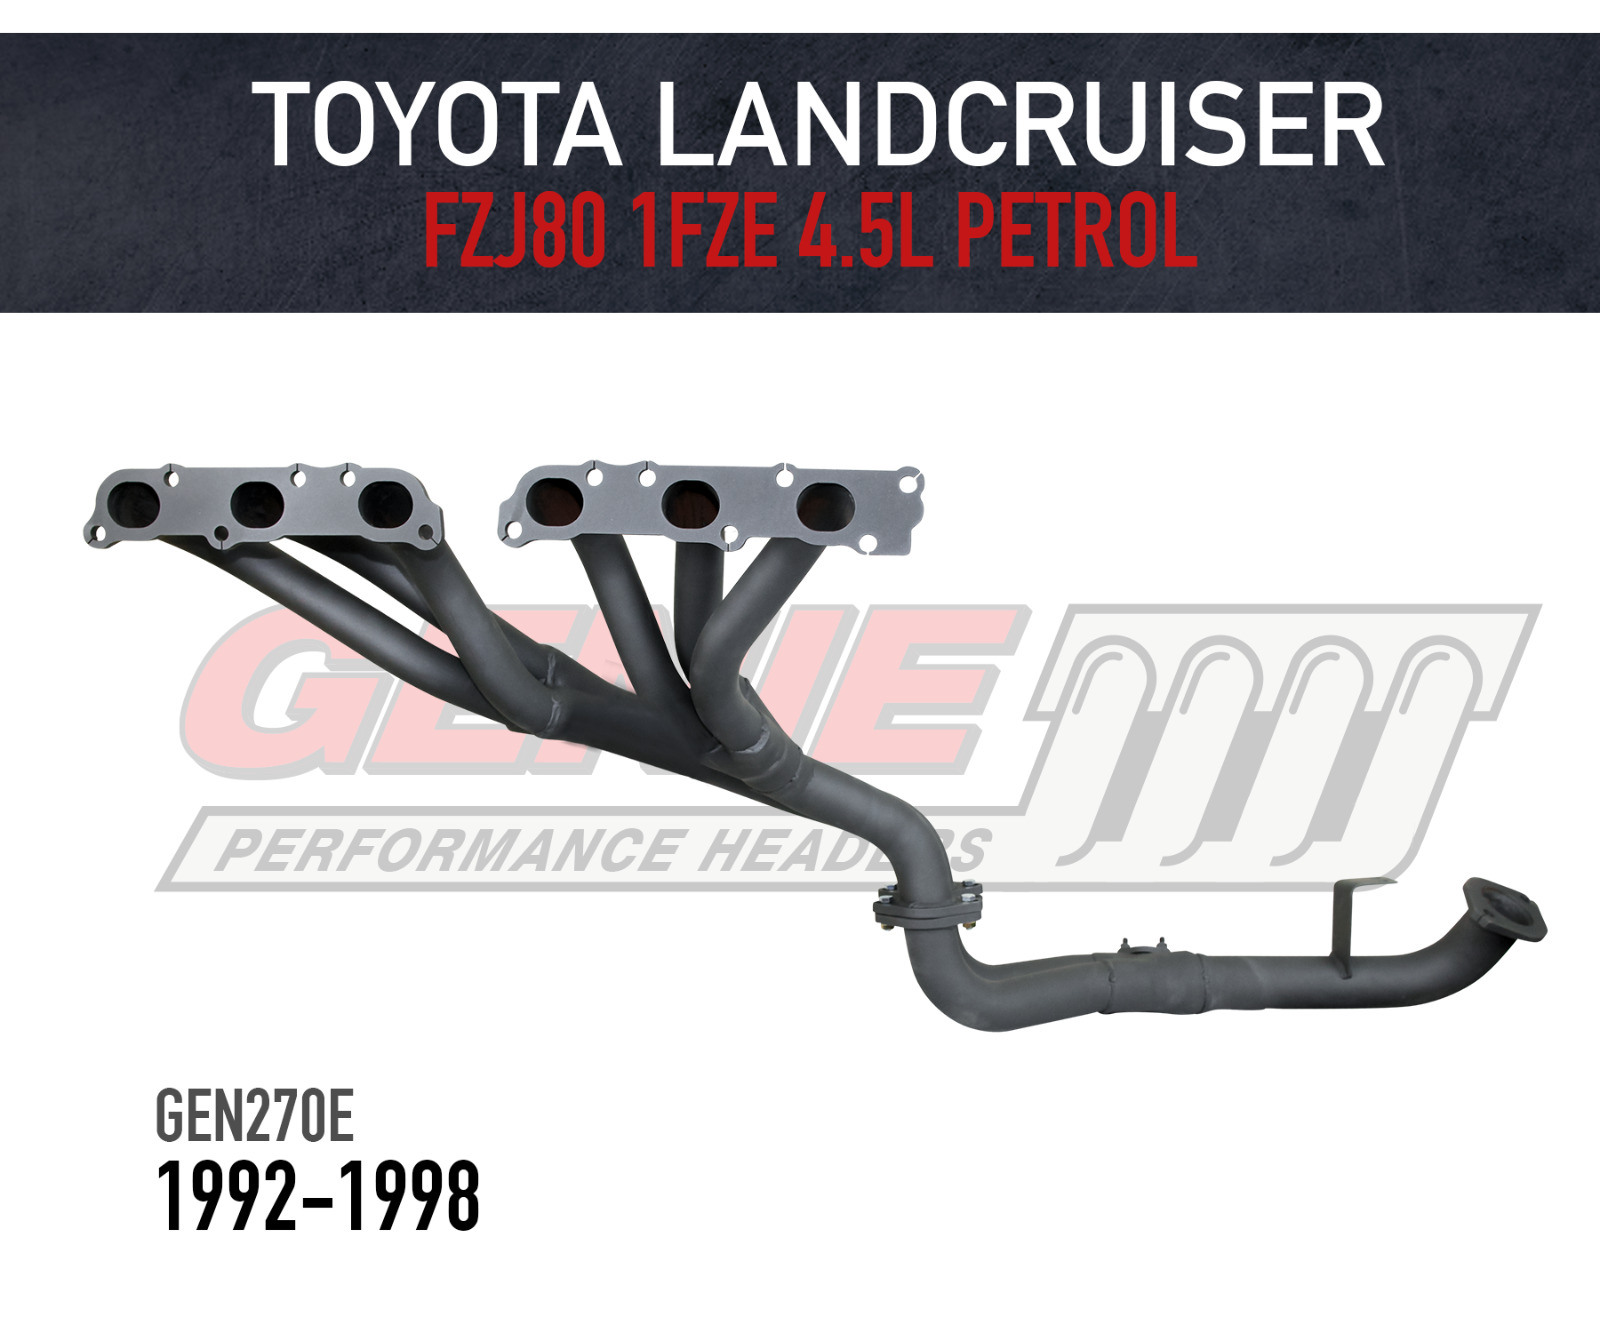 Genie Headers to suit Toyota Landcruiser 80 Series FZJ80 4.5L (1992-1998)